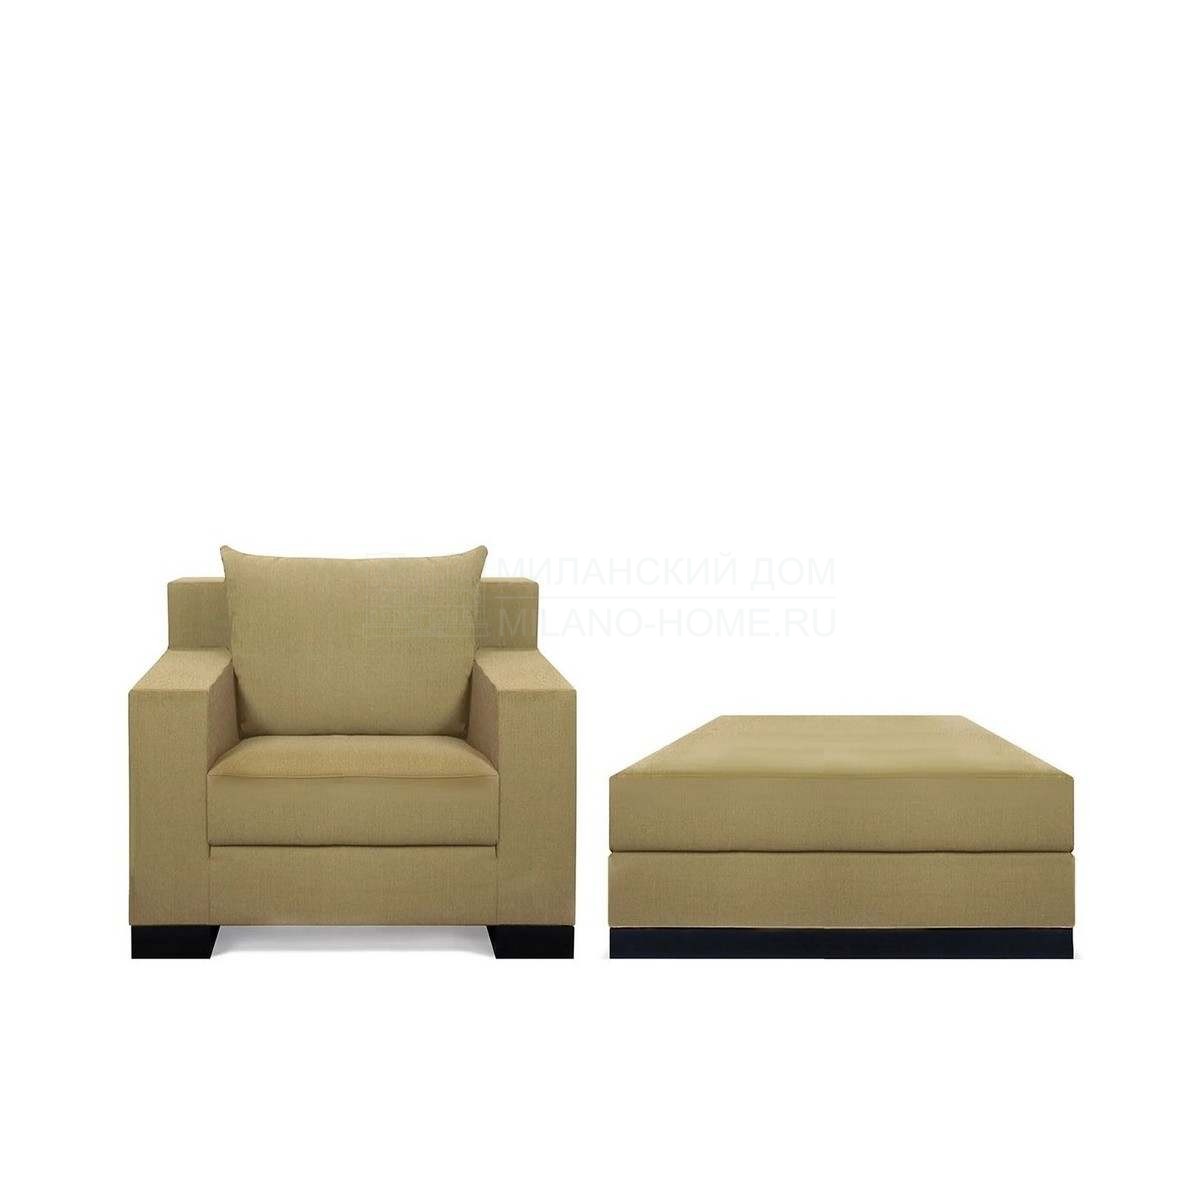 Кресло London armchair из Италии фабрики ARMANI CASA